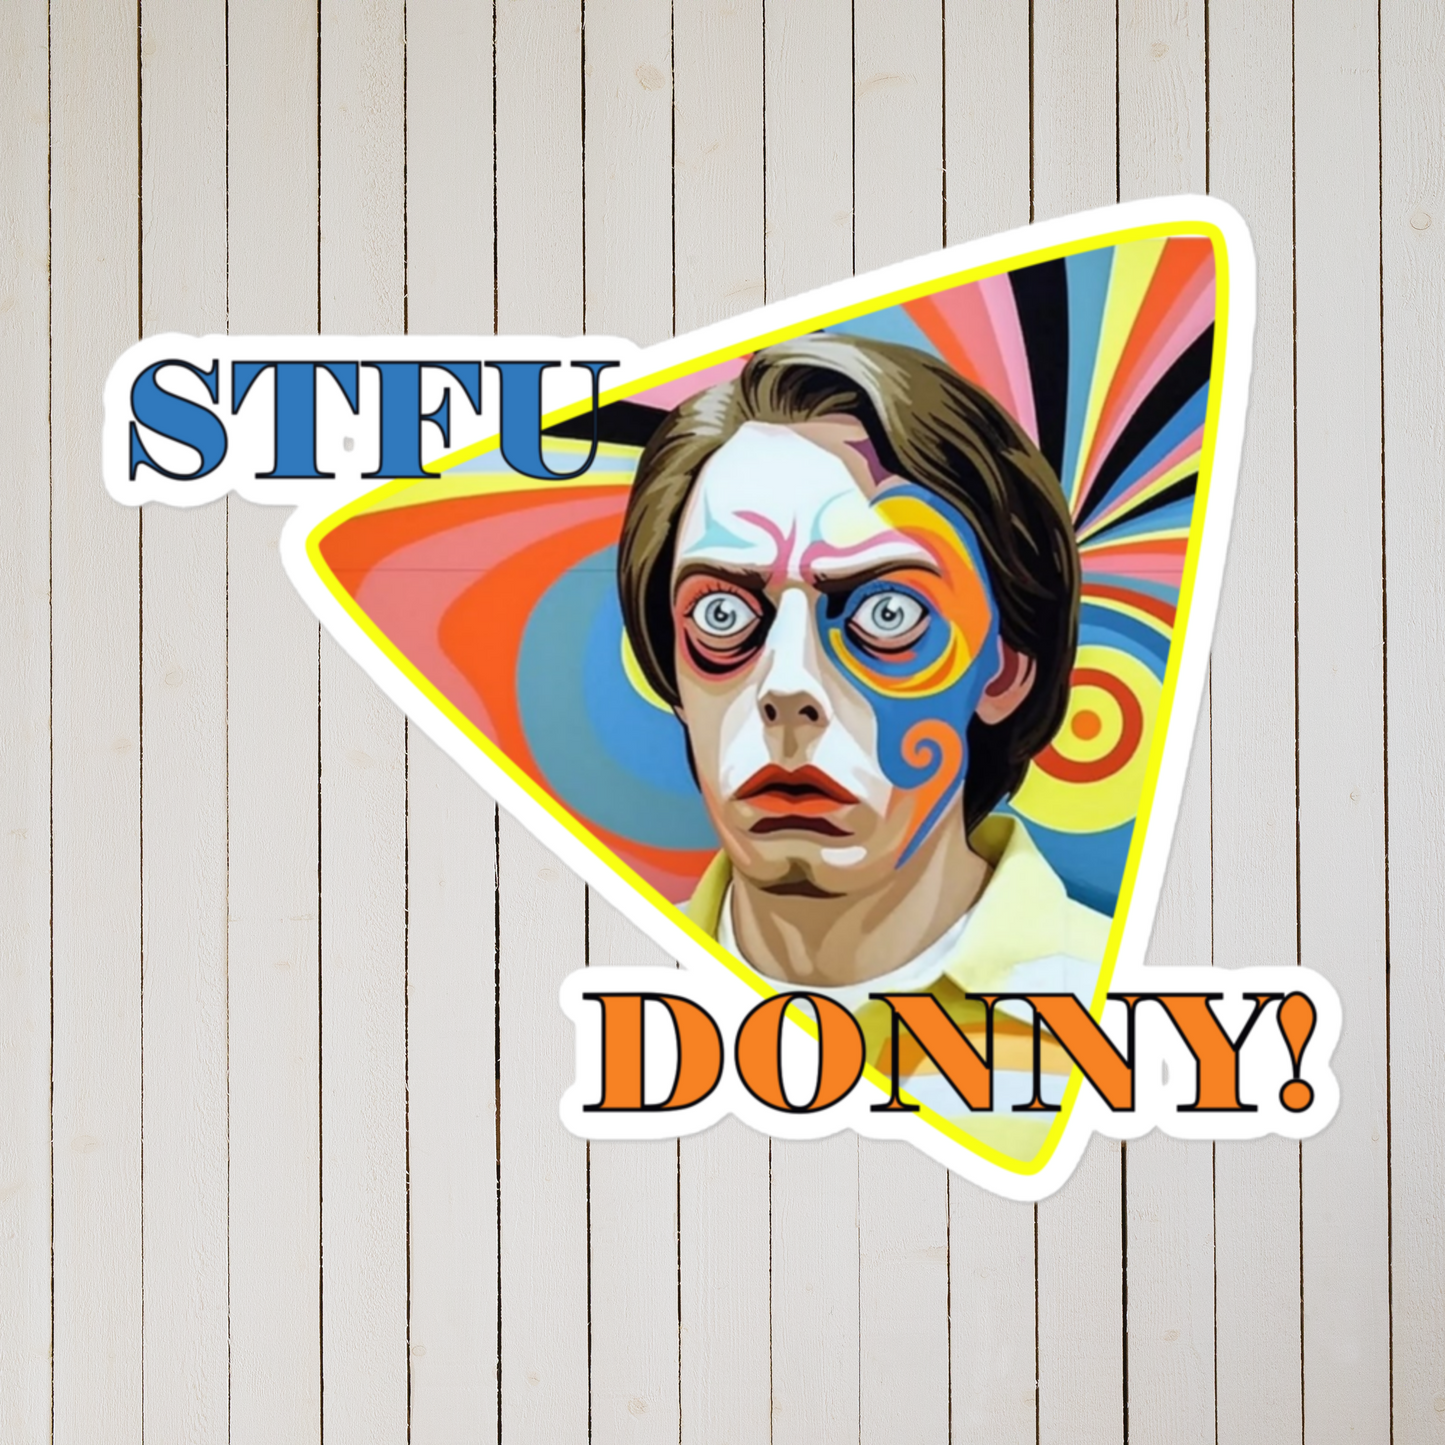 STFU DONNY! Bubble-free stickers